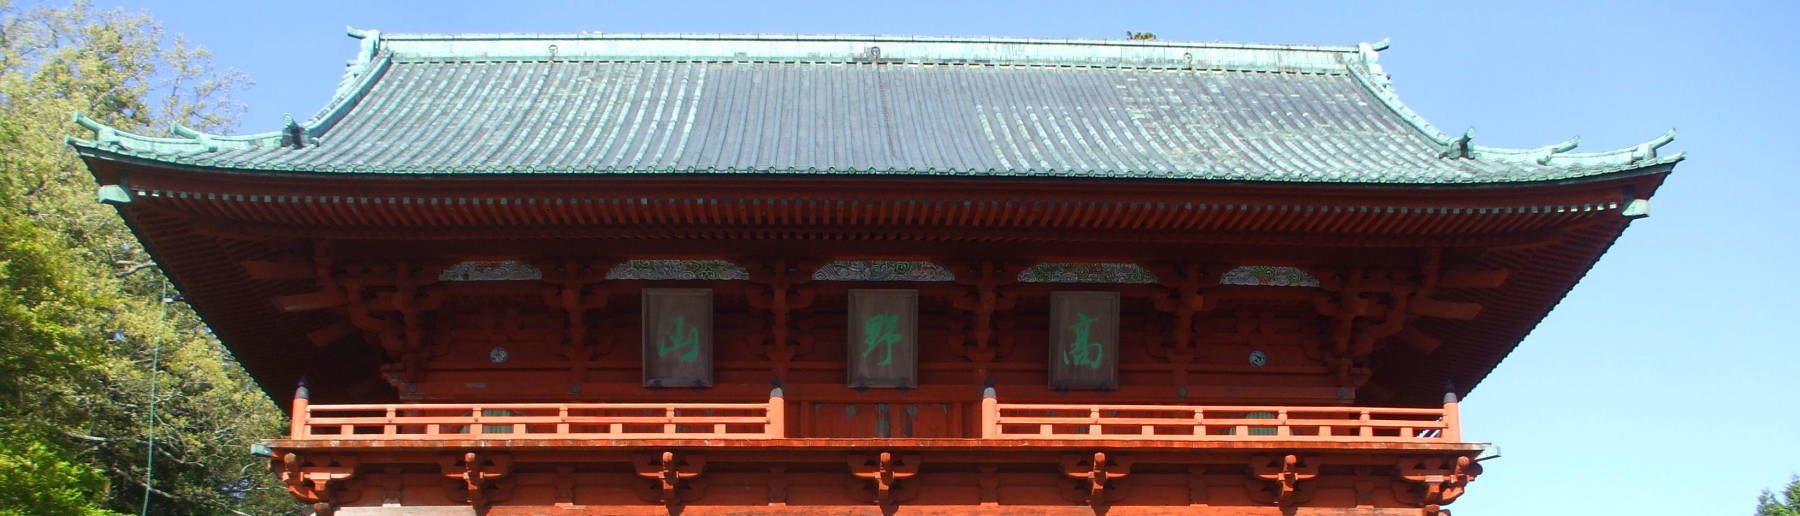 Daimon, main gate at Kōya-san.